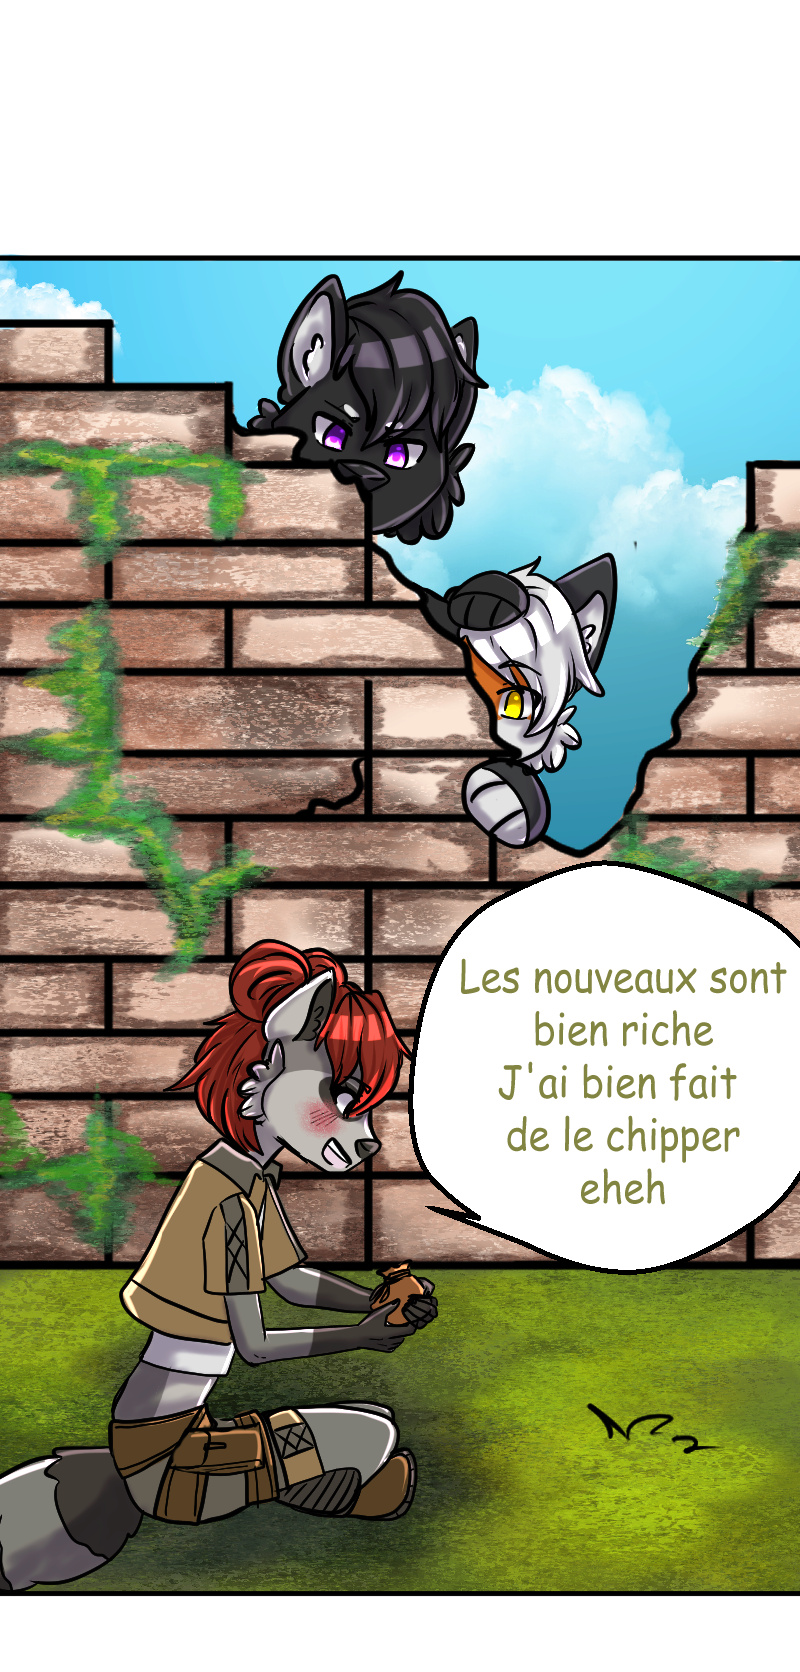 Webtoon page 9 Page_139